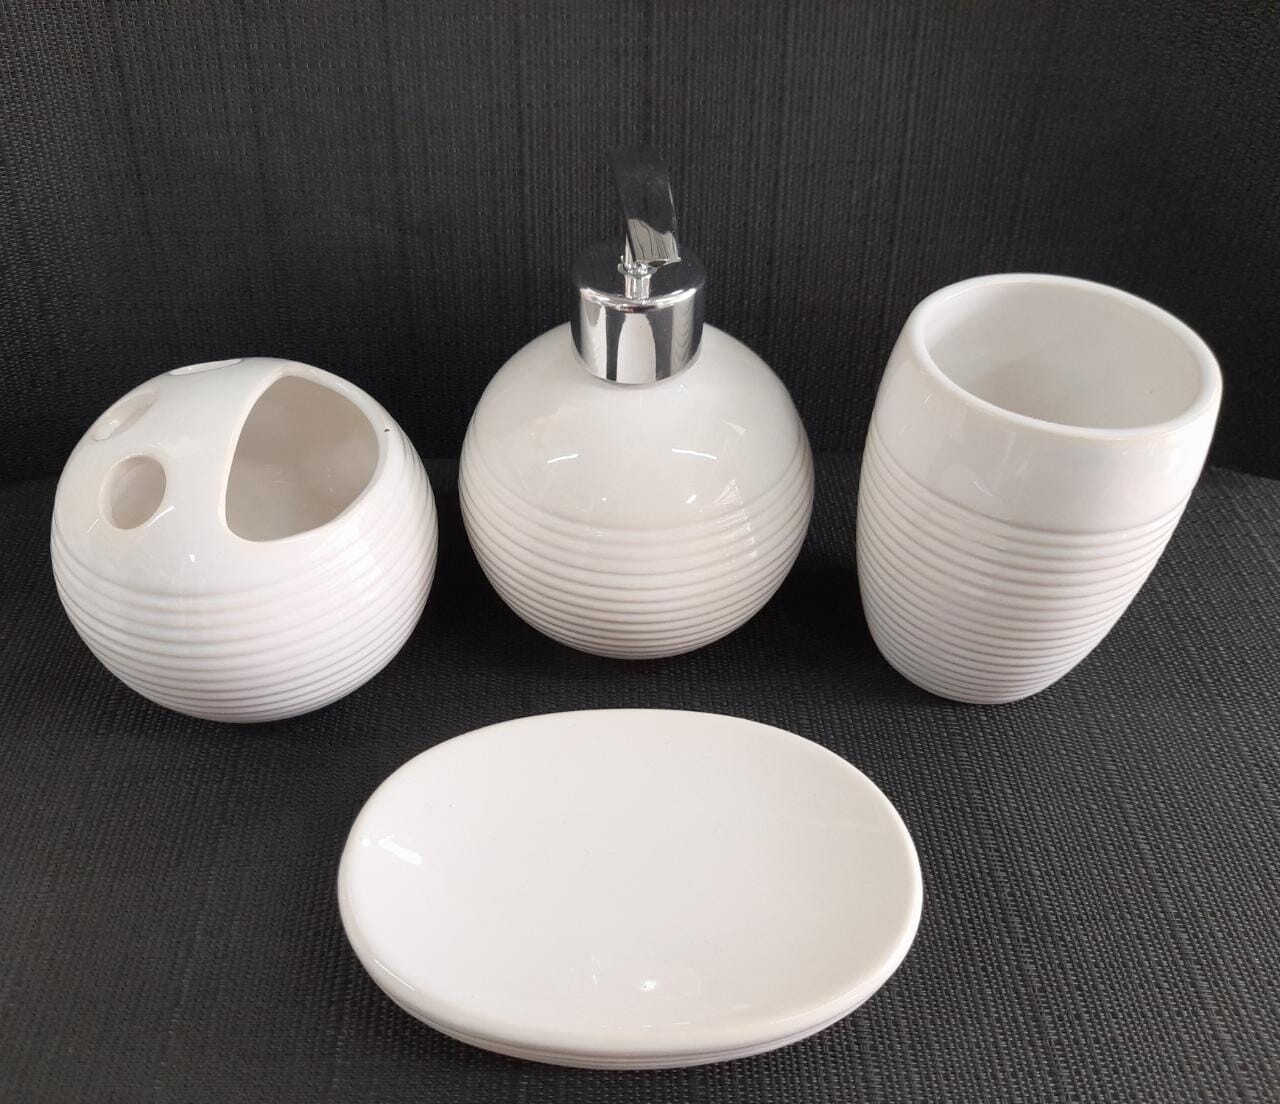 Ceramic bathroom set 4pcs ZT-935